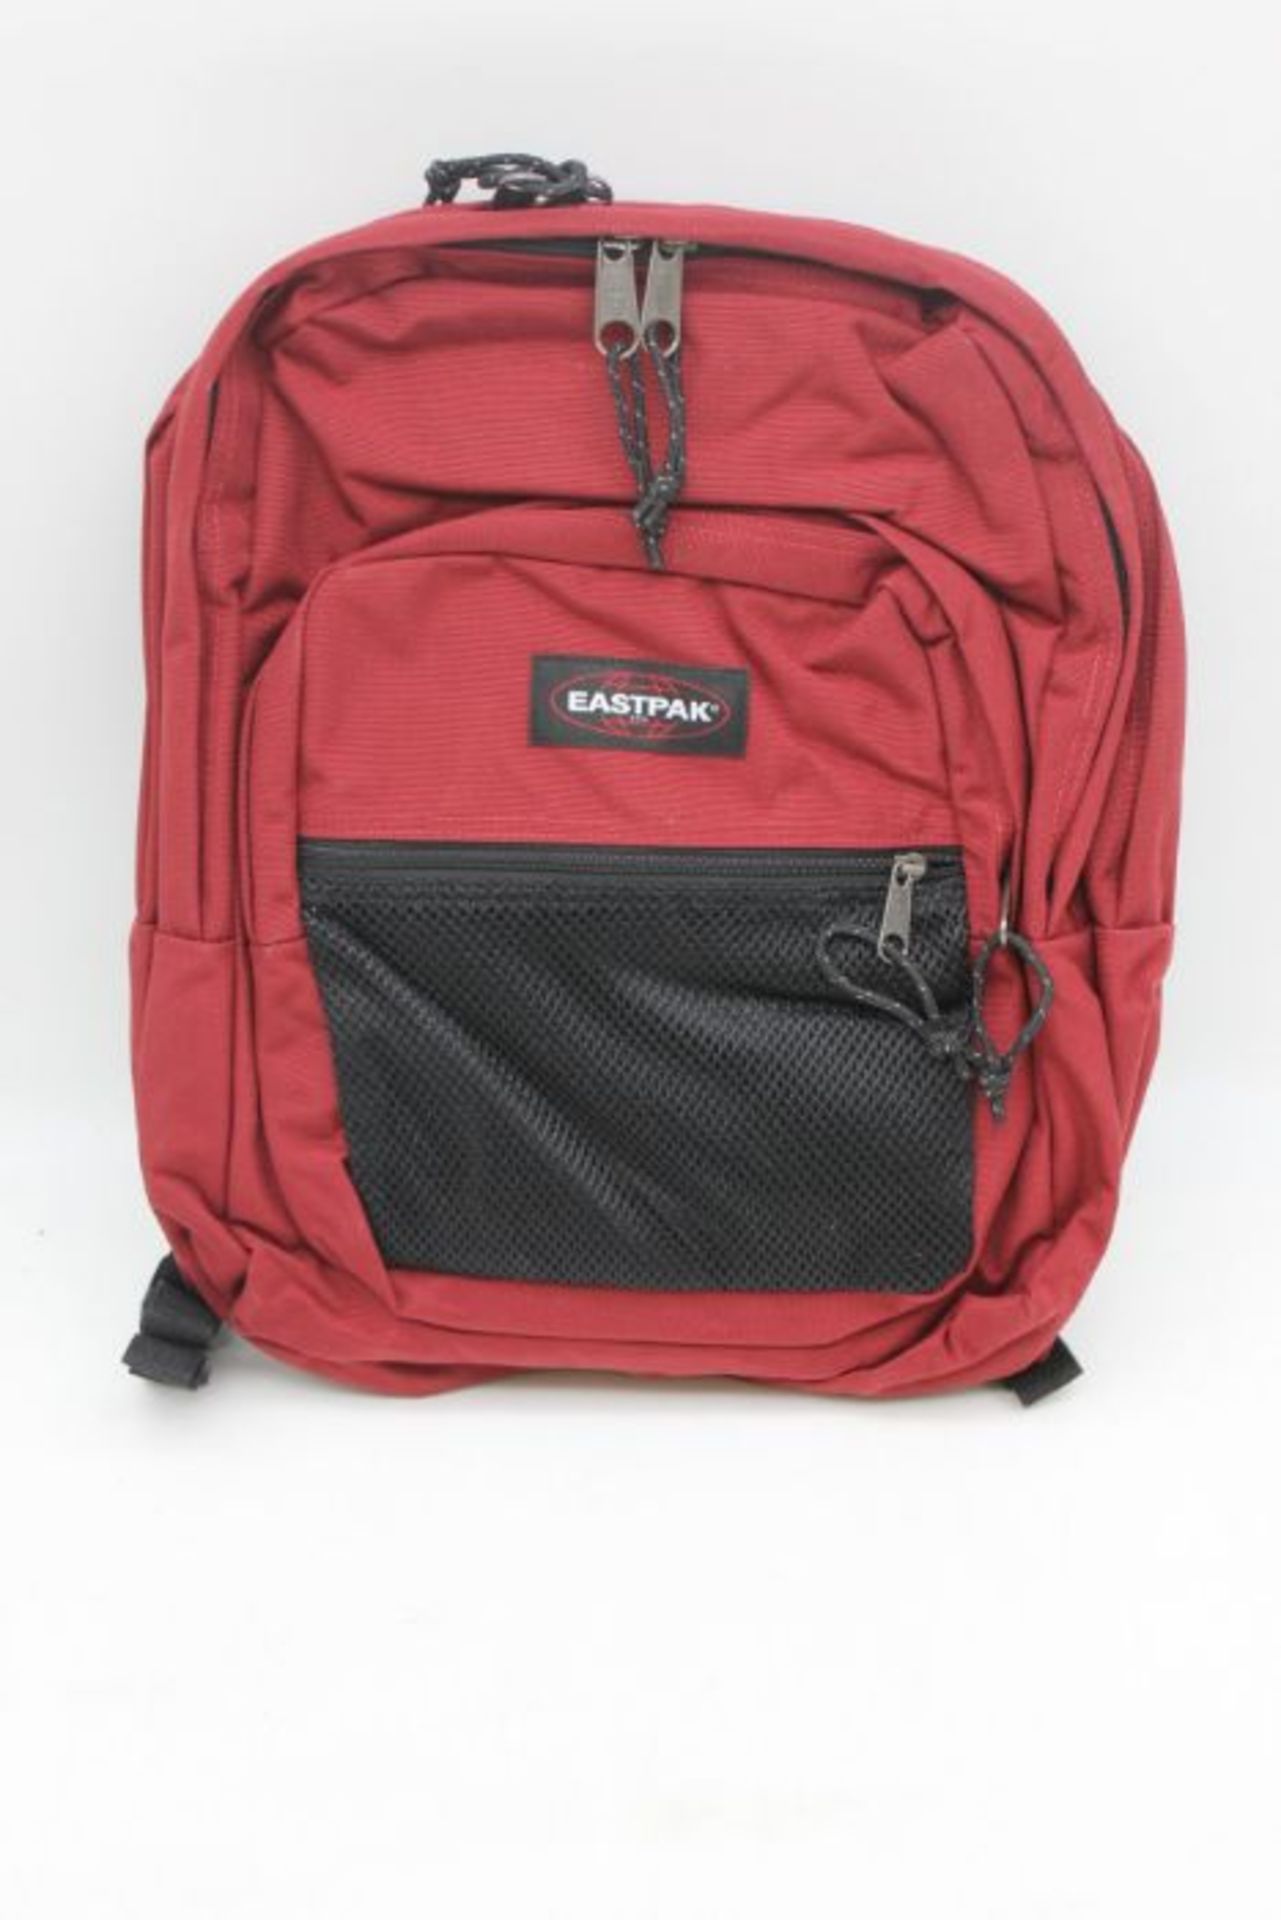 Eastpak Pinnacle Backpack, Burgundy Polyamide, 38L, with Tags - Image 2 of 2